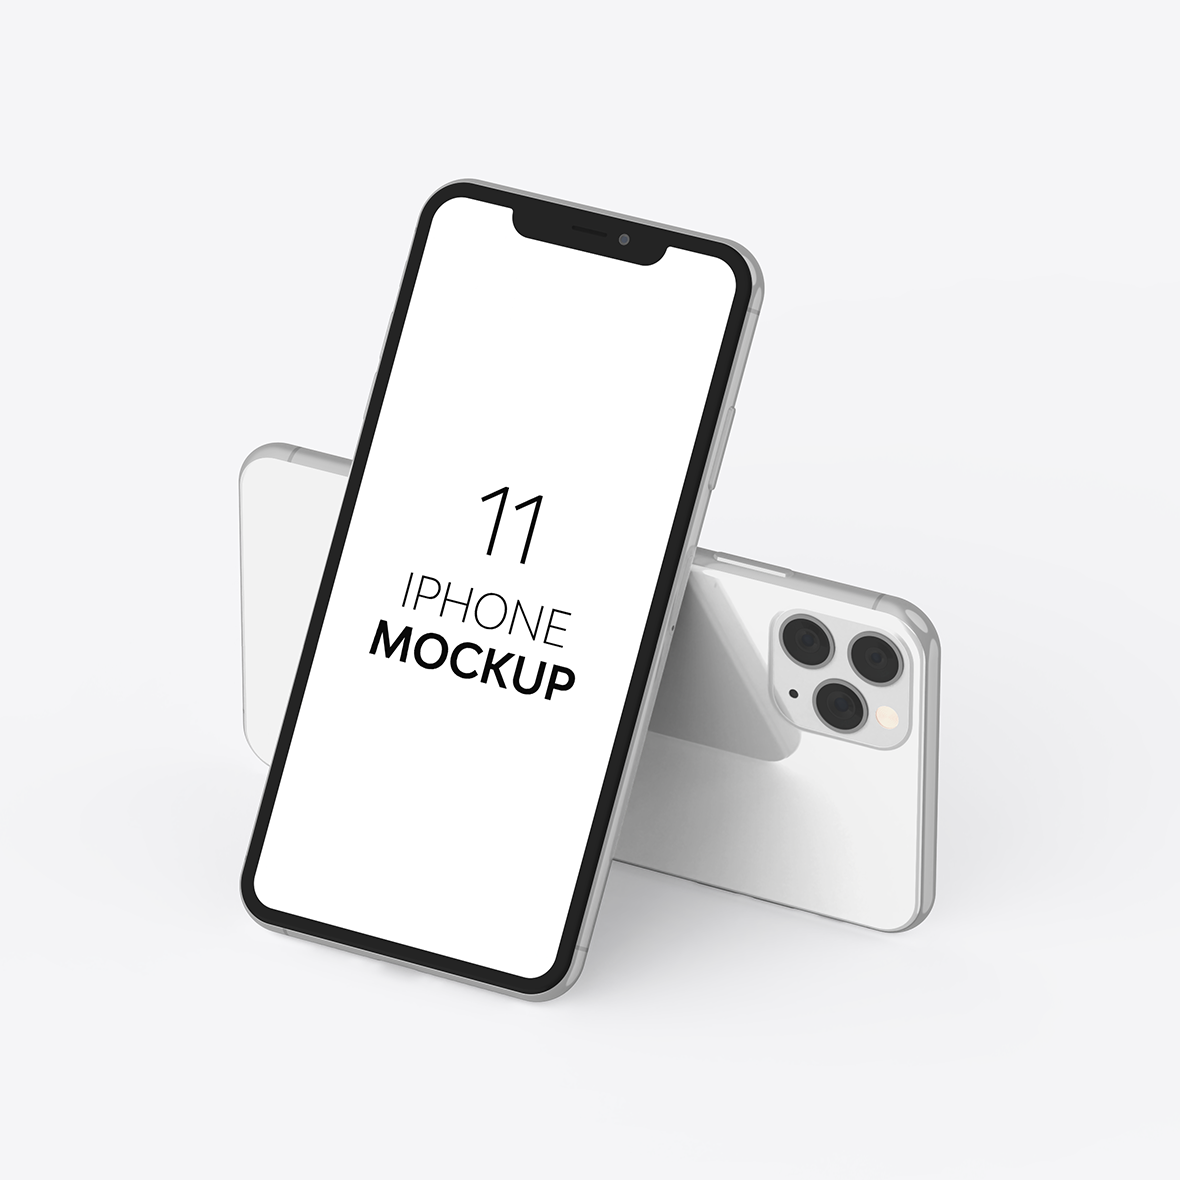 iPhone 11 Mockup